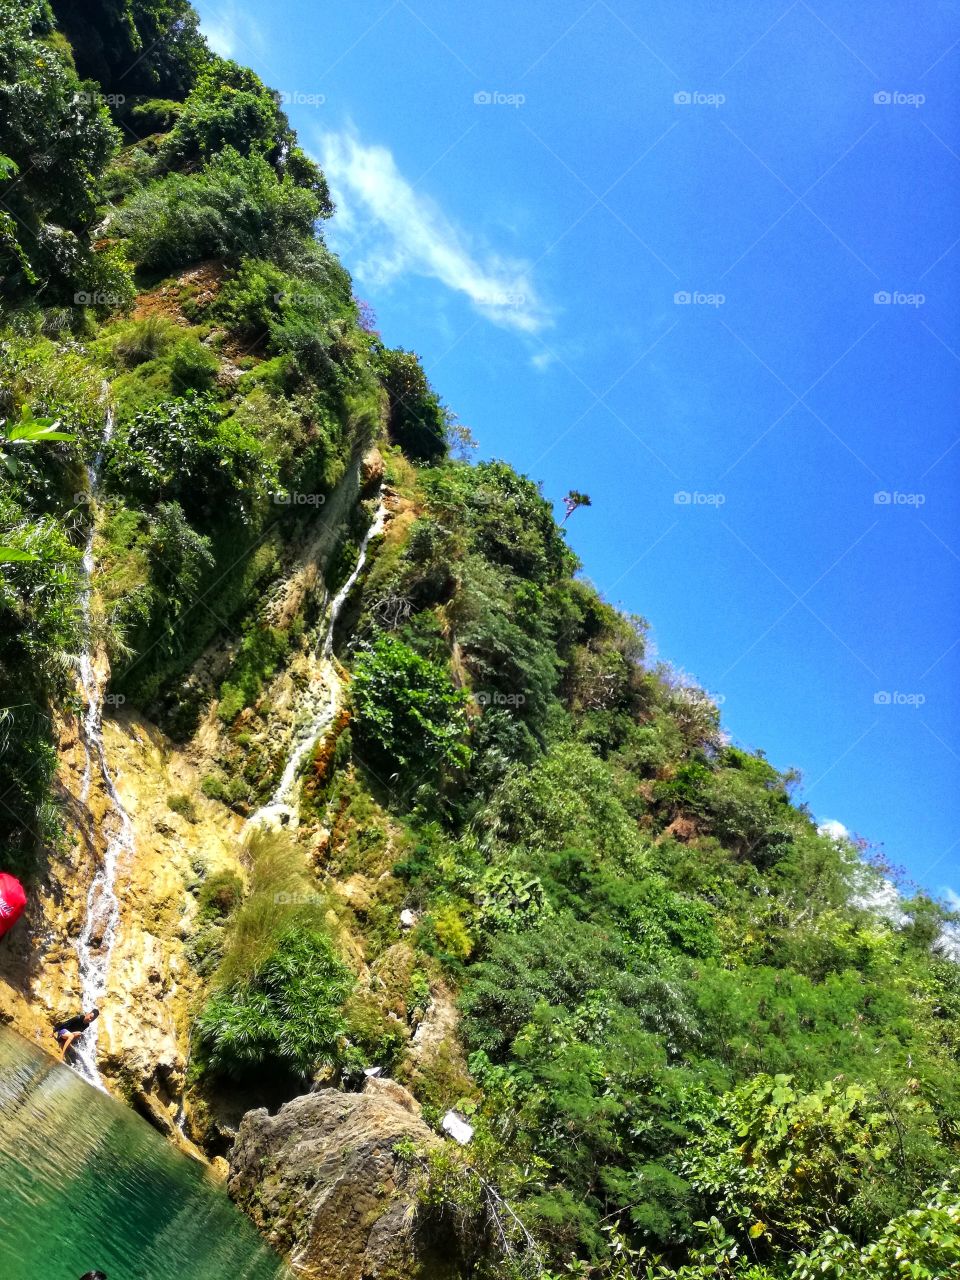 Chasing waterfalls! 😍 One of the best falls I have ever seen in Pangasinan, PH. Busay Falls is located at Barangay Cabaleng, Bani Pangasinan.